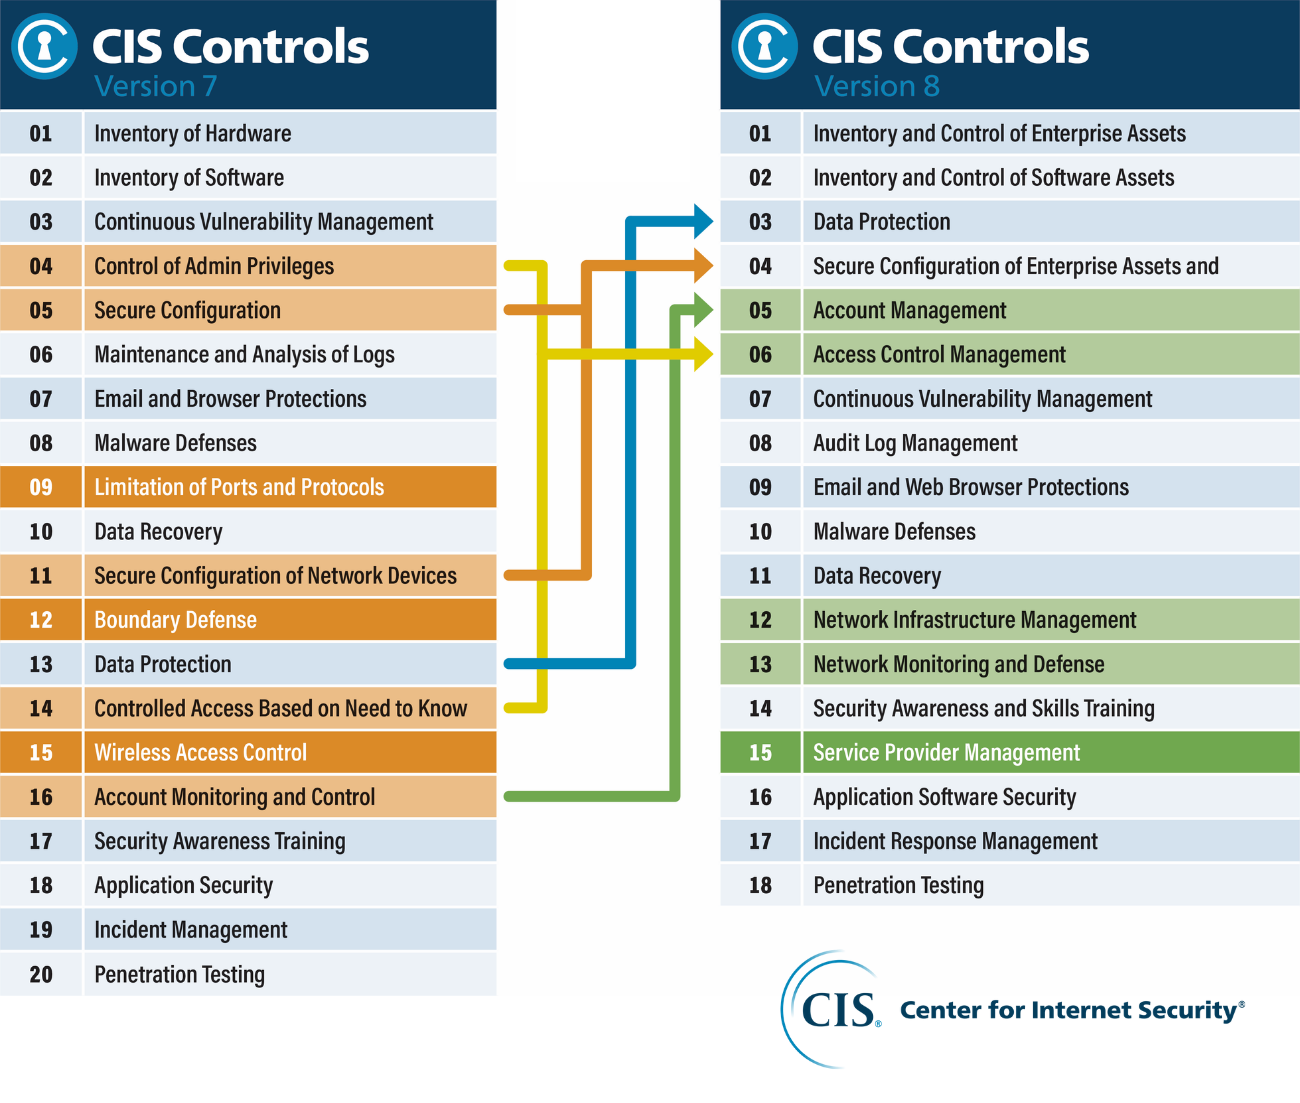 CIS controls version 8